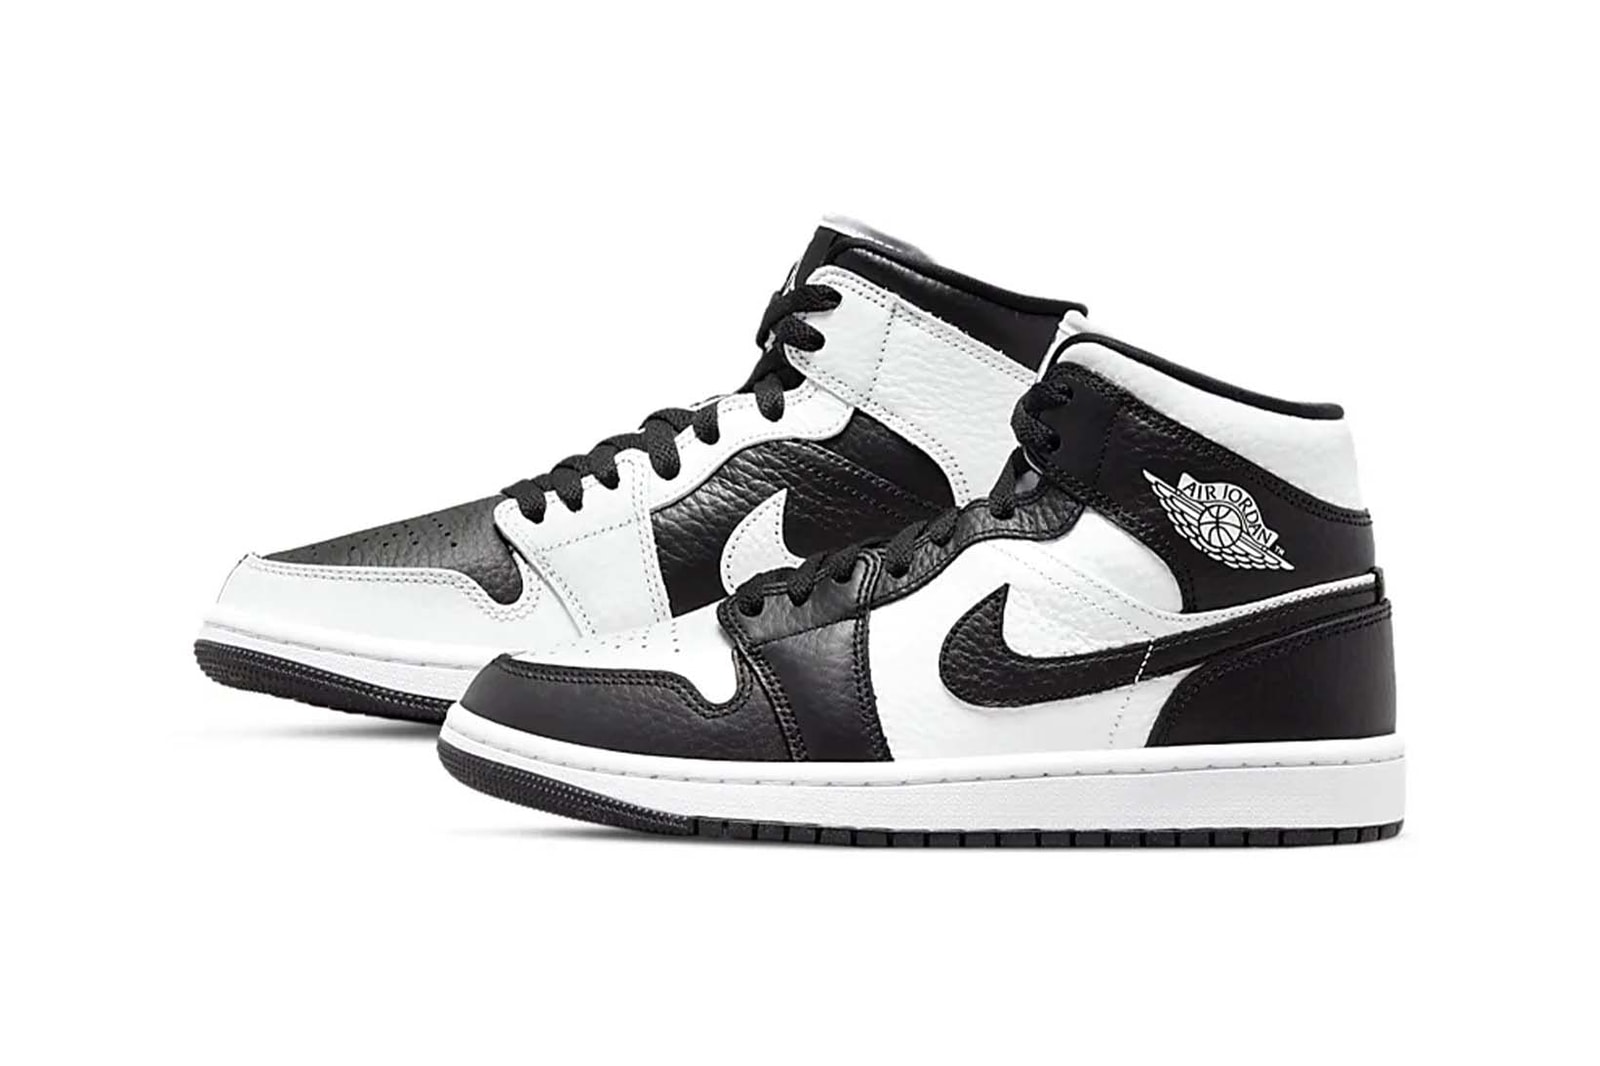 Sneaker Release Calendar: Nike, Air Jordan, New Balance